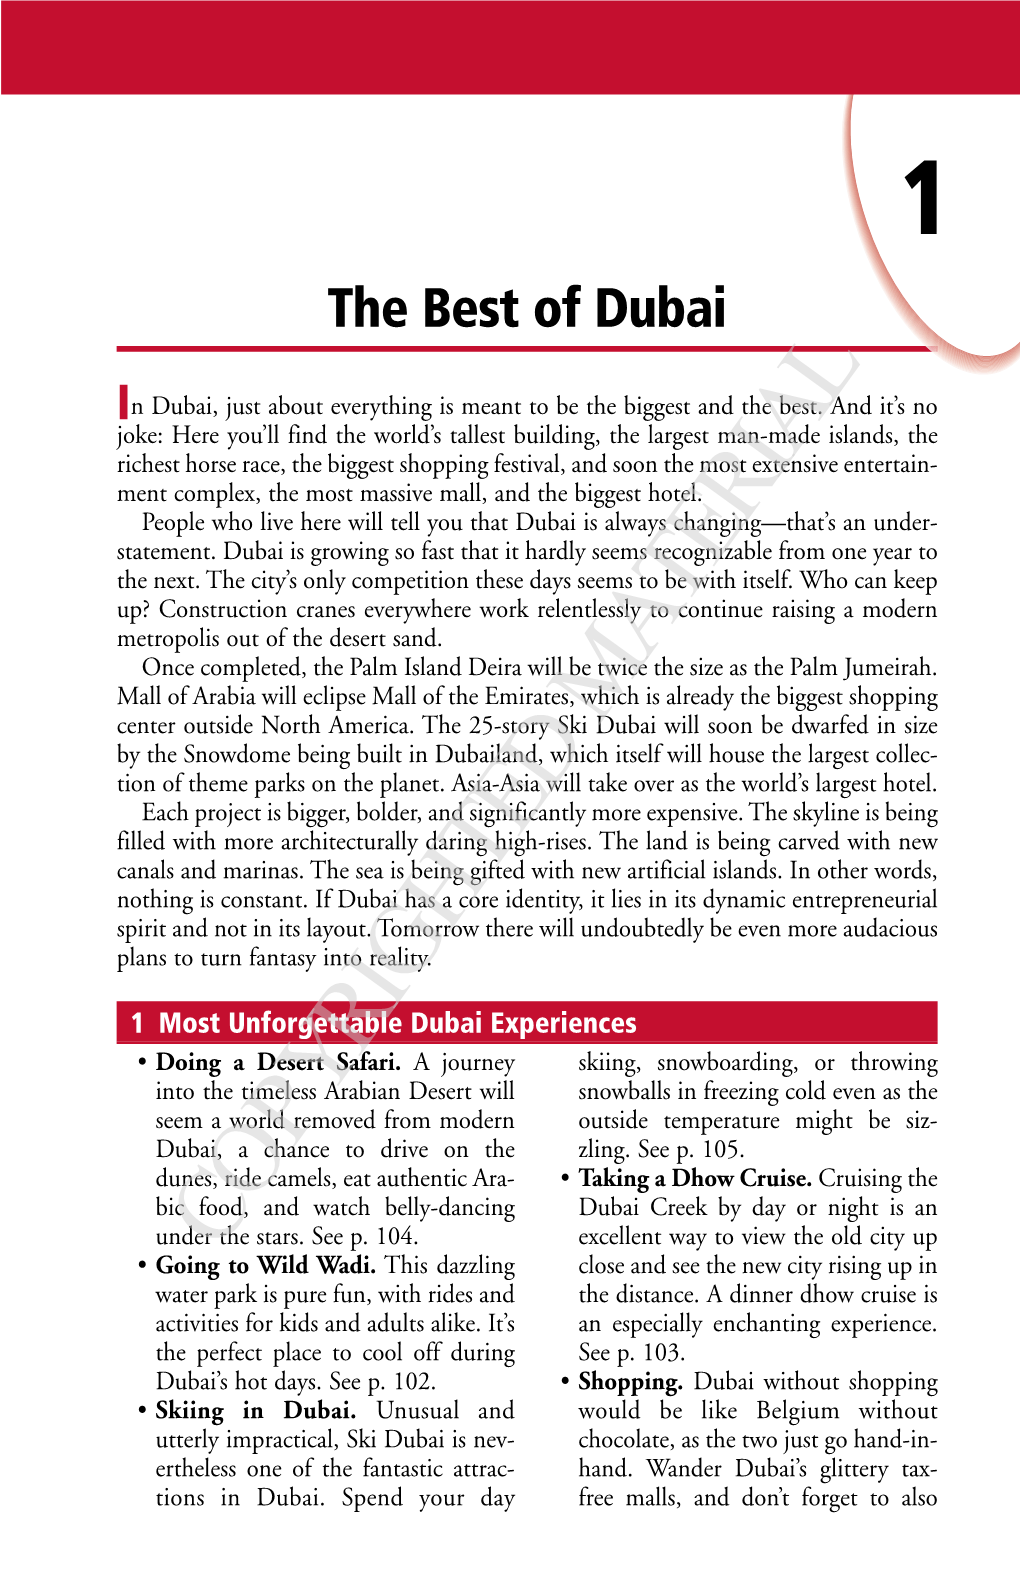 The Best of Dubai